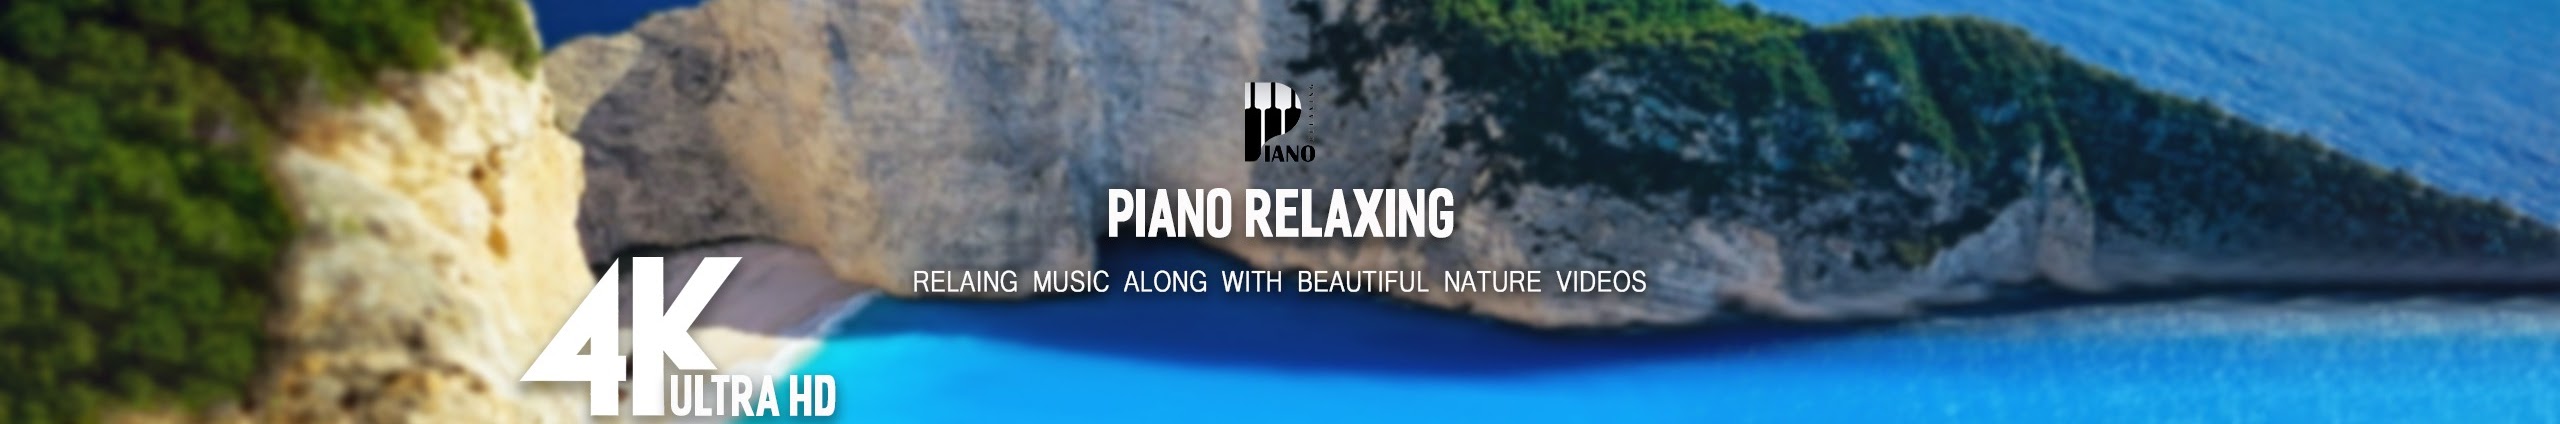 Piano Relaxing - On BiH Link